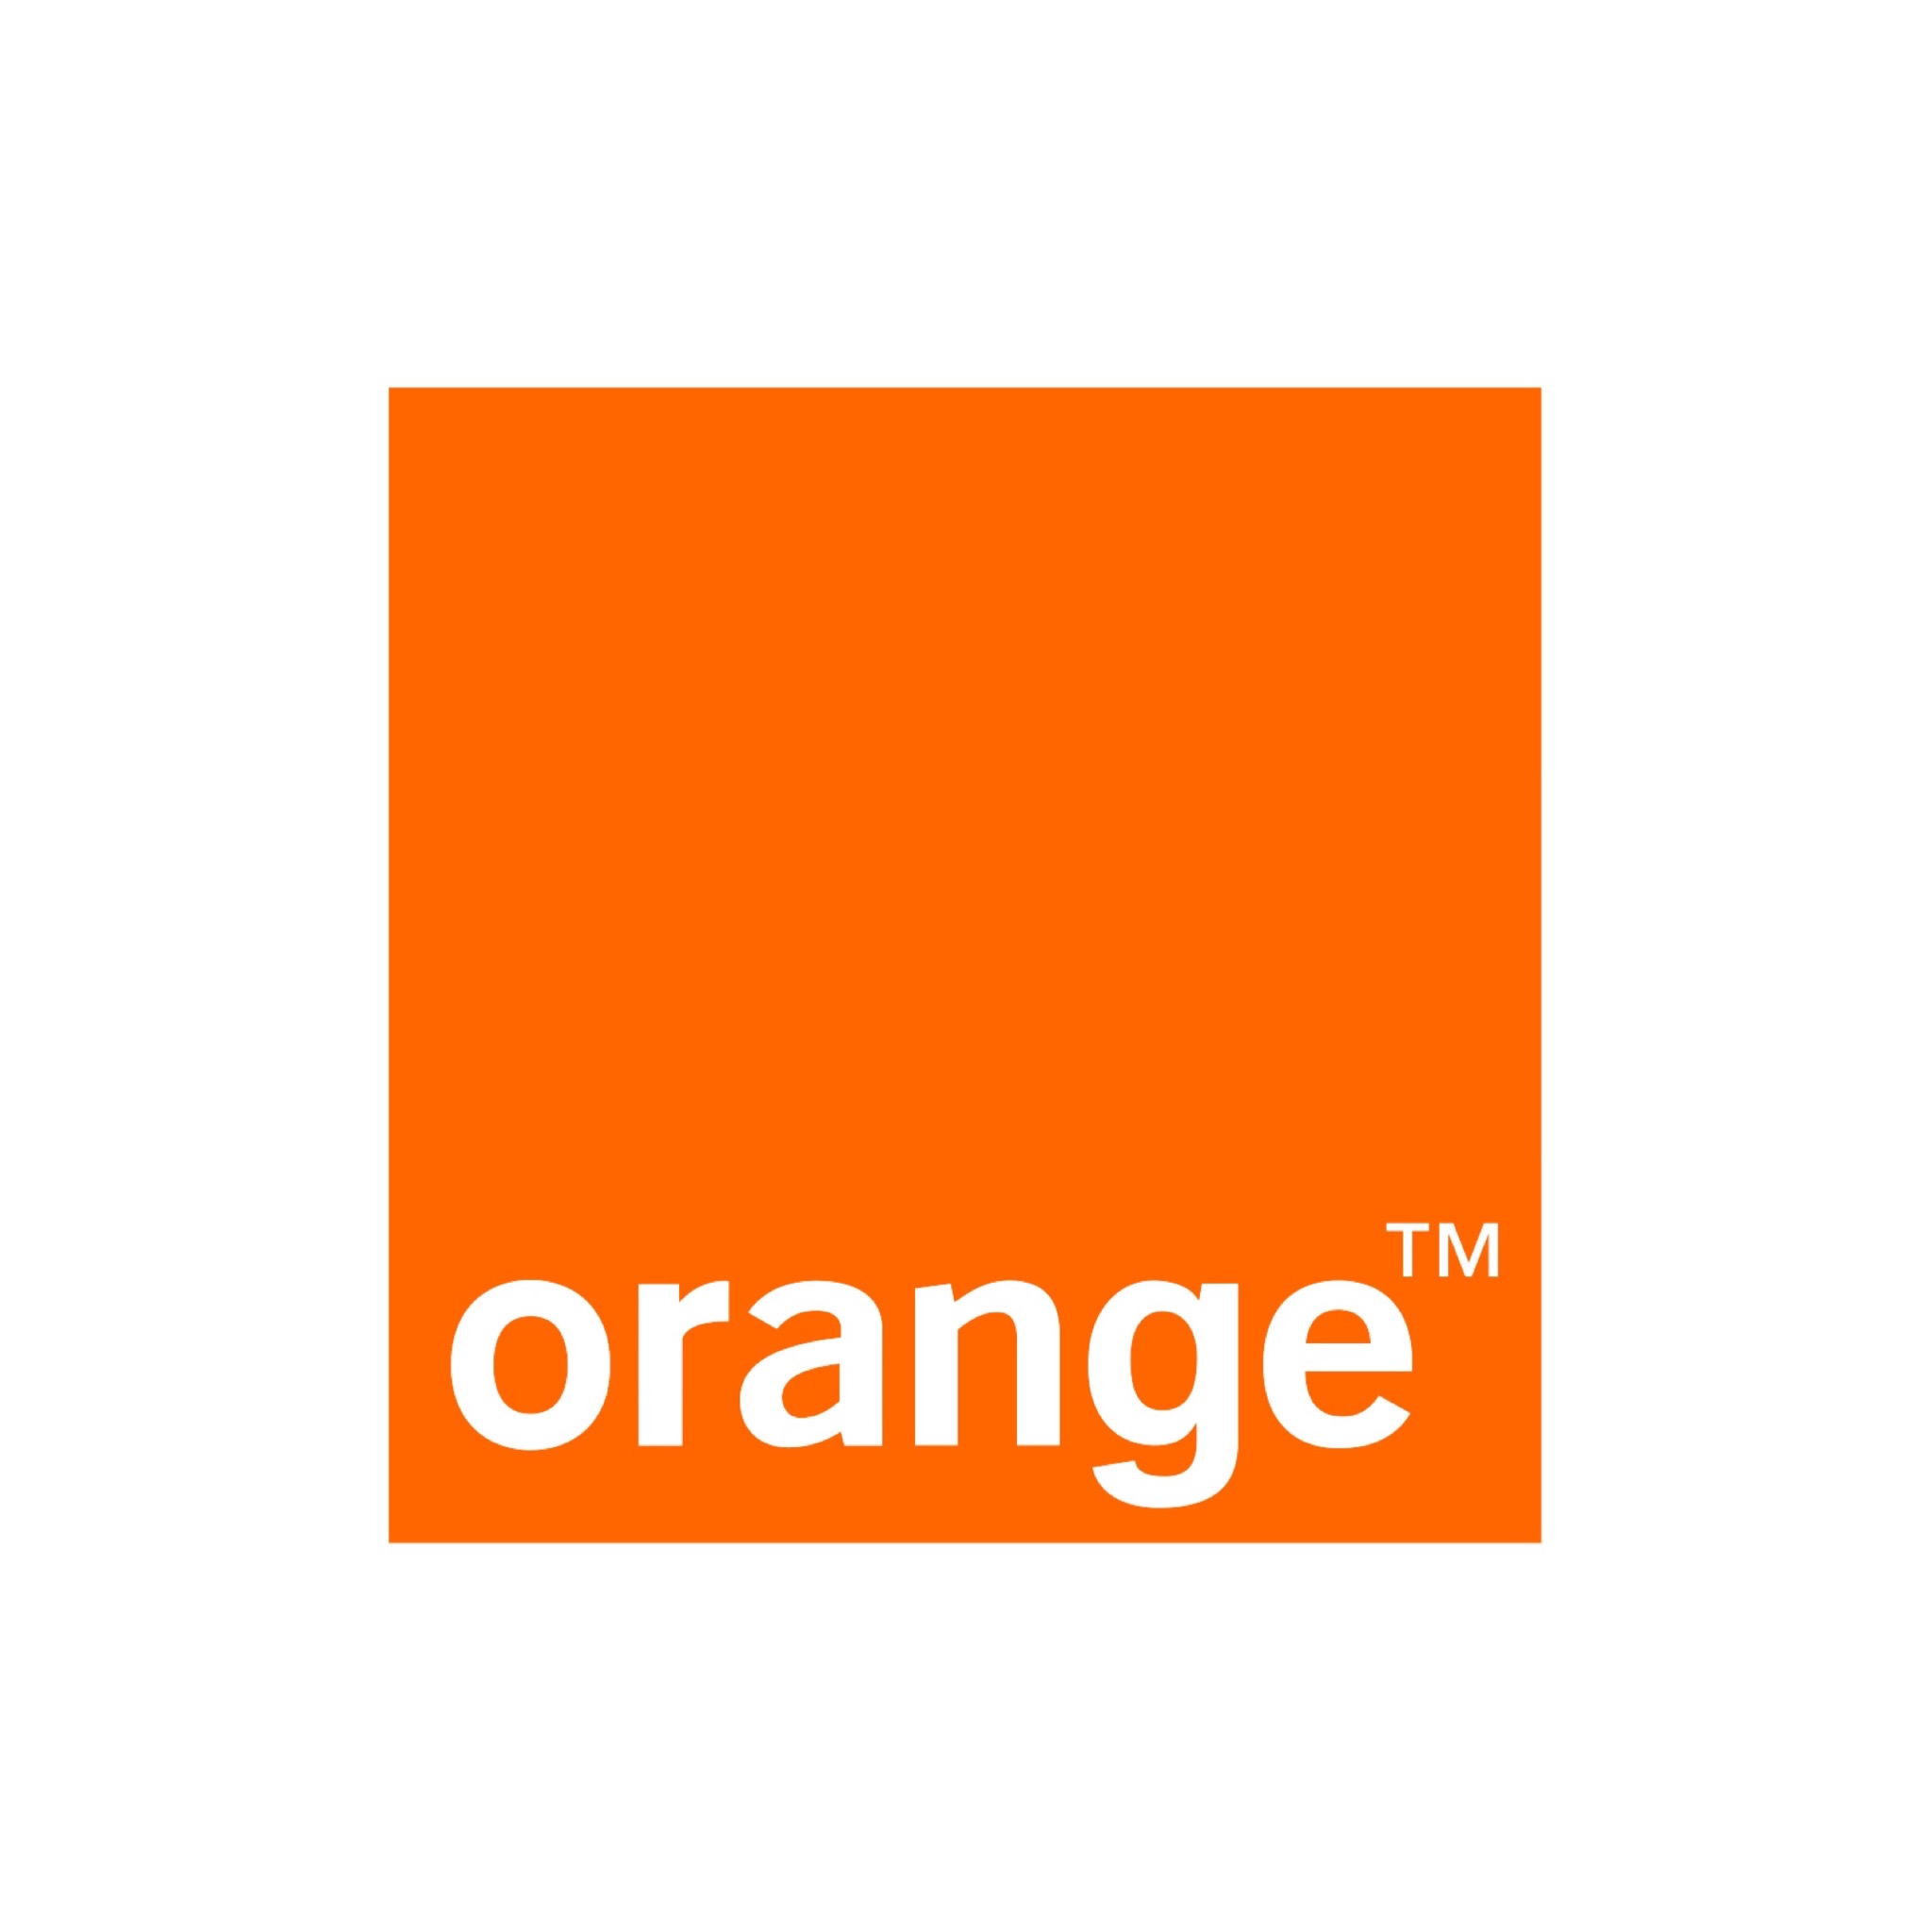 263-orange-bw-2-1647893103901.jpg